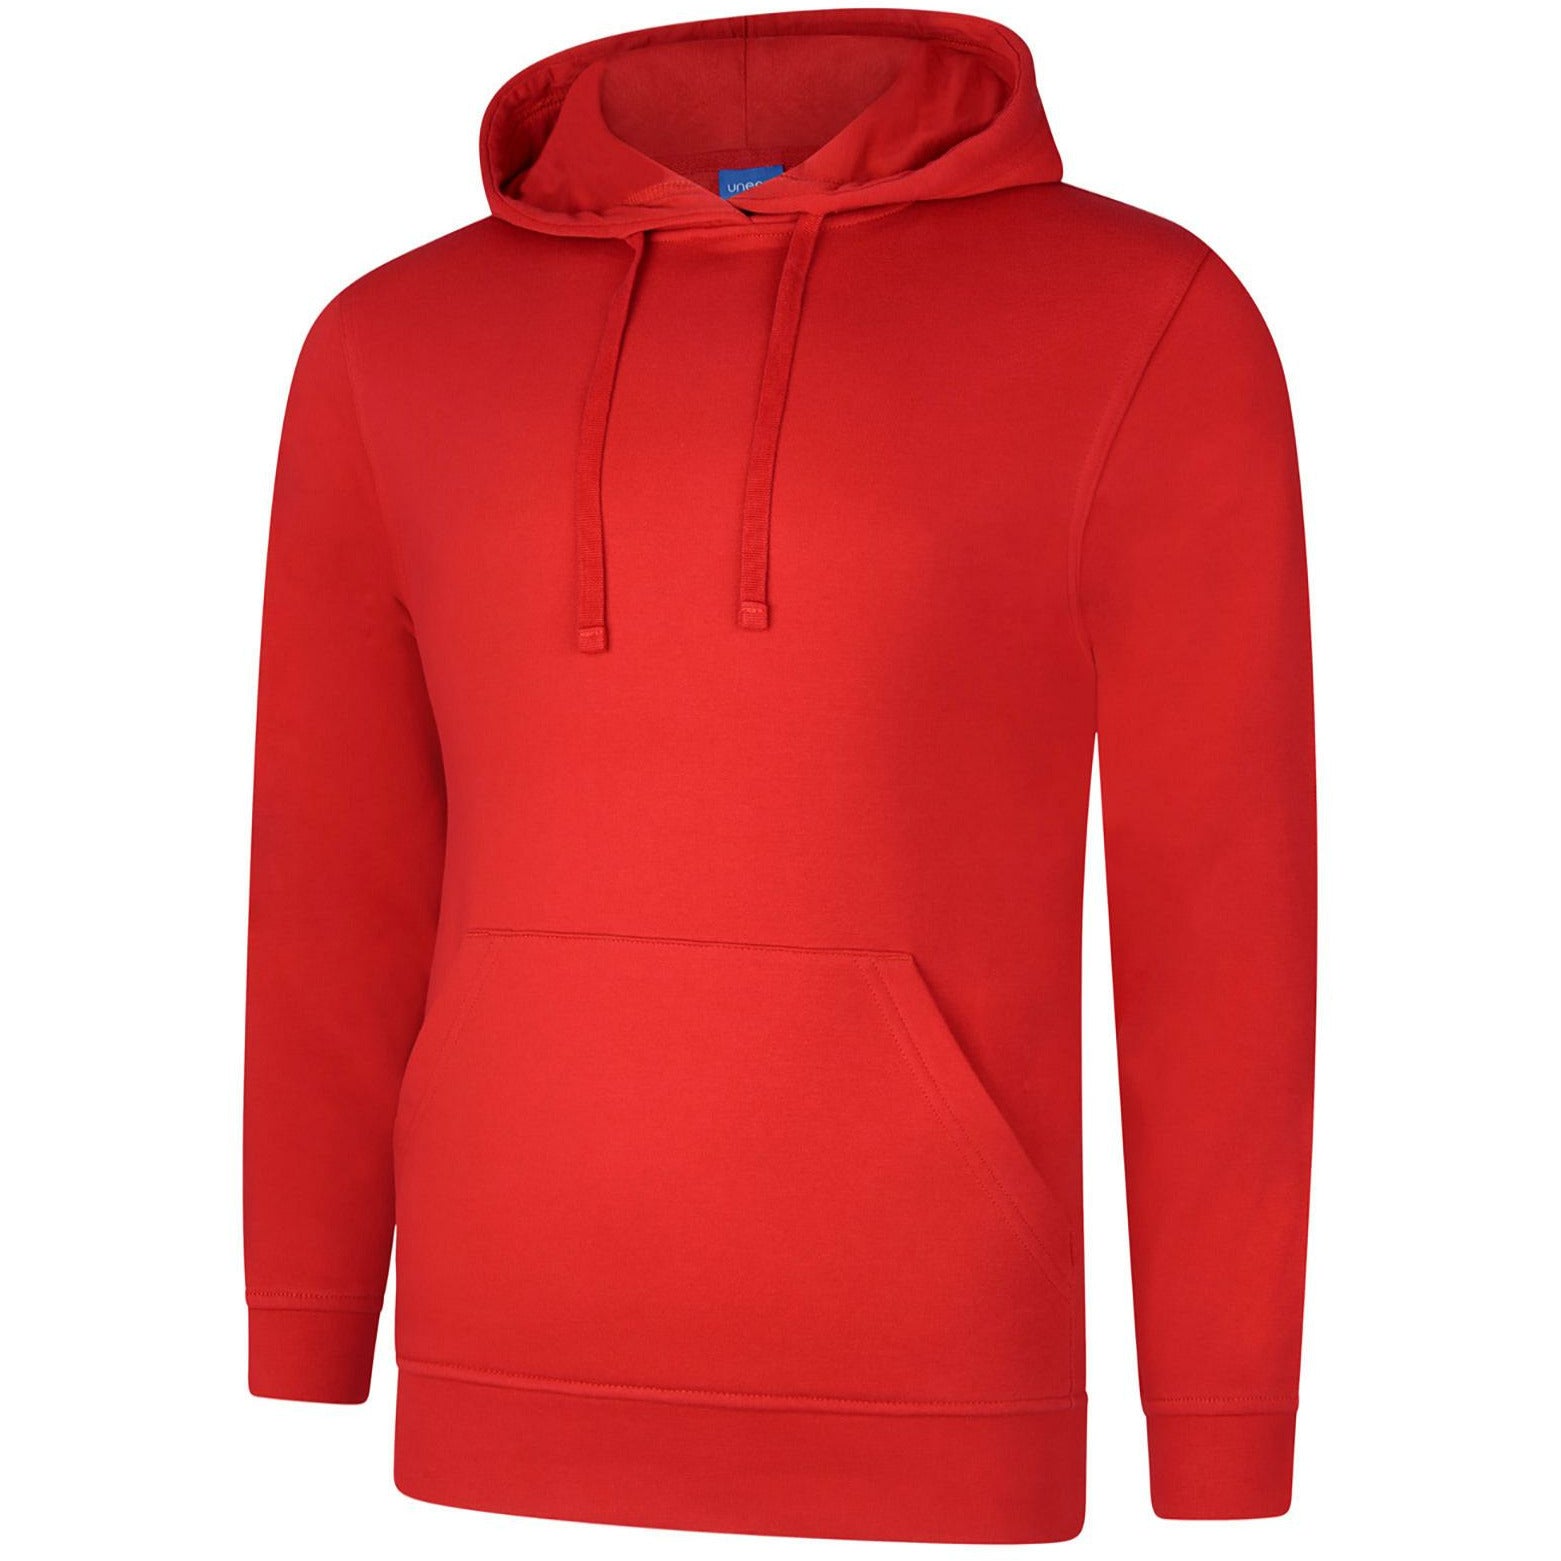 Deluxe Hooded Sweatshirt (L - 2XL) Red